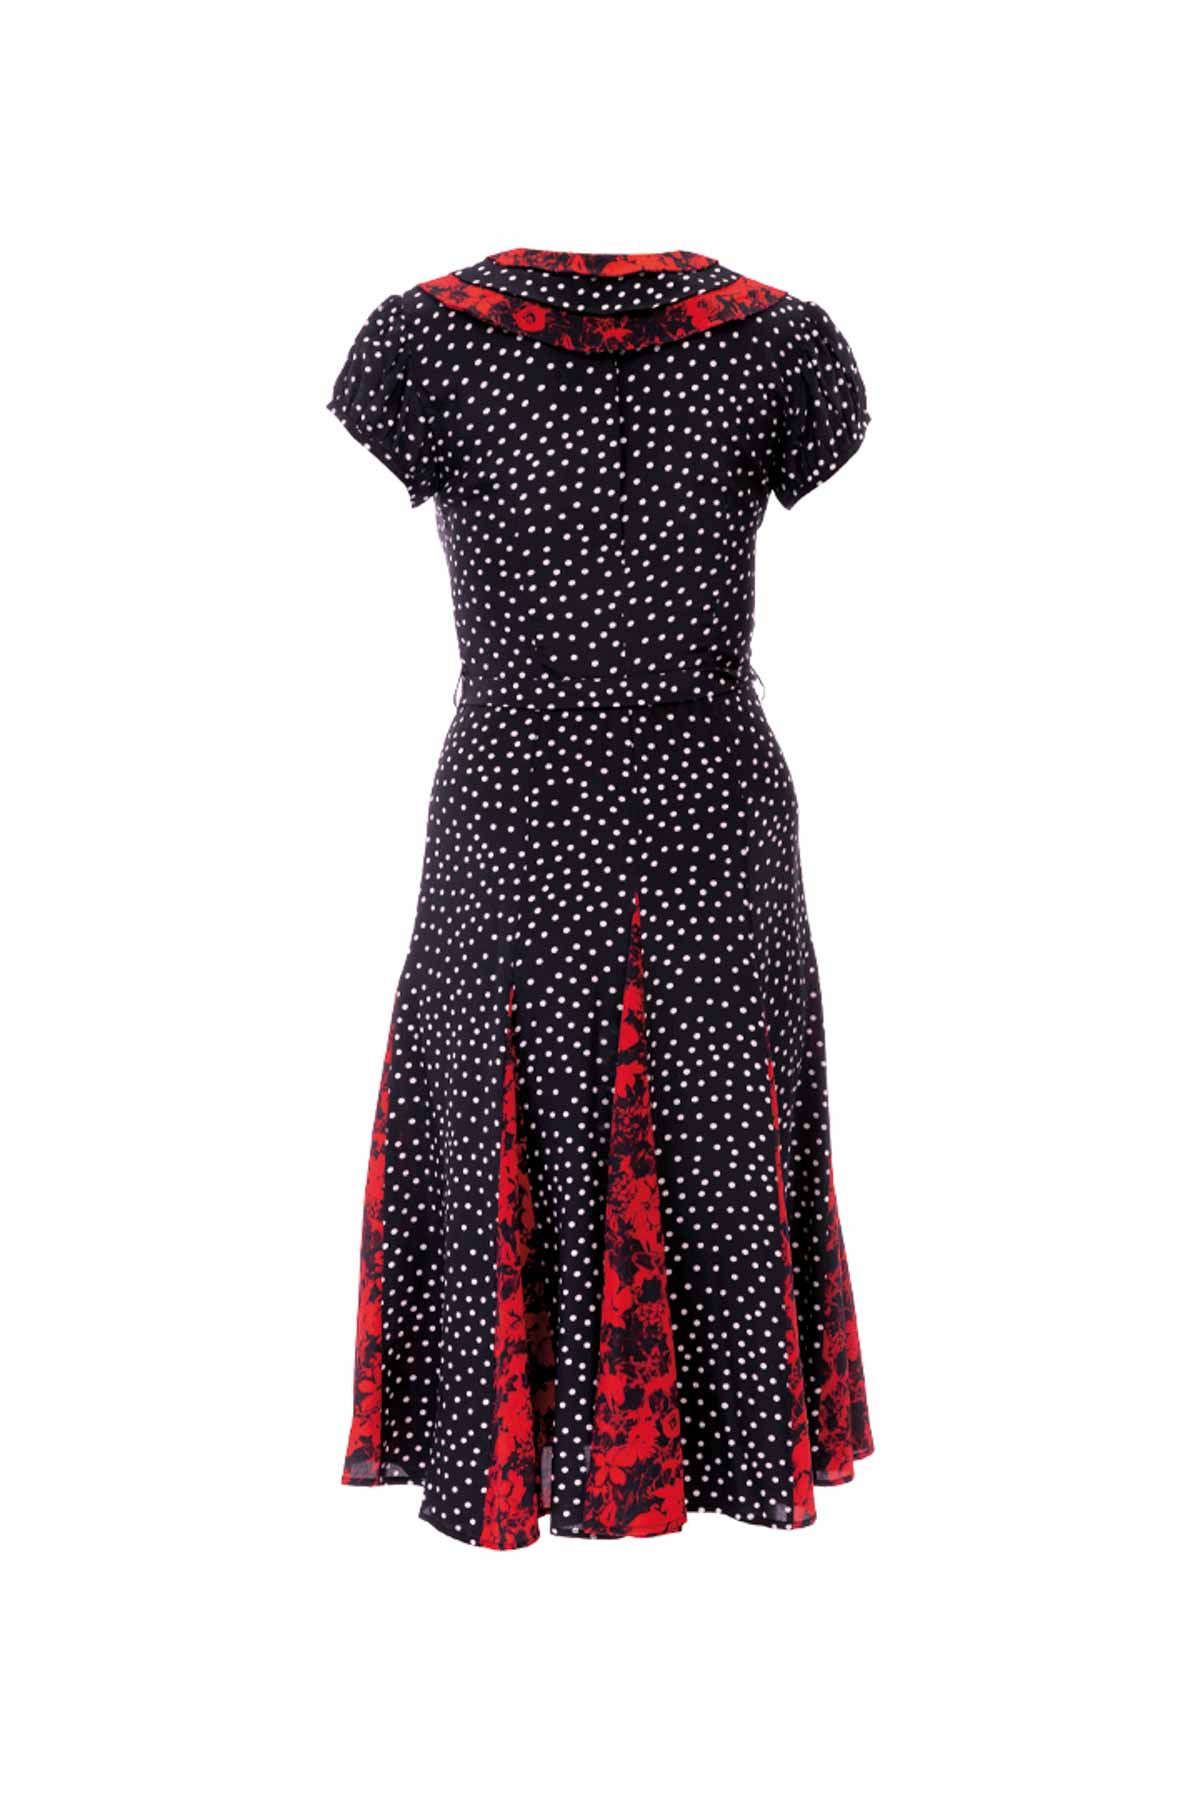 Tri Collar Silk Dress - Black Polka & Red Floral